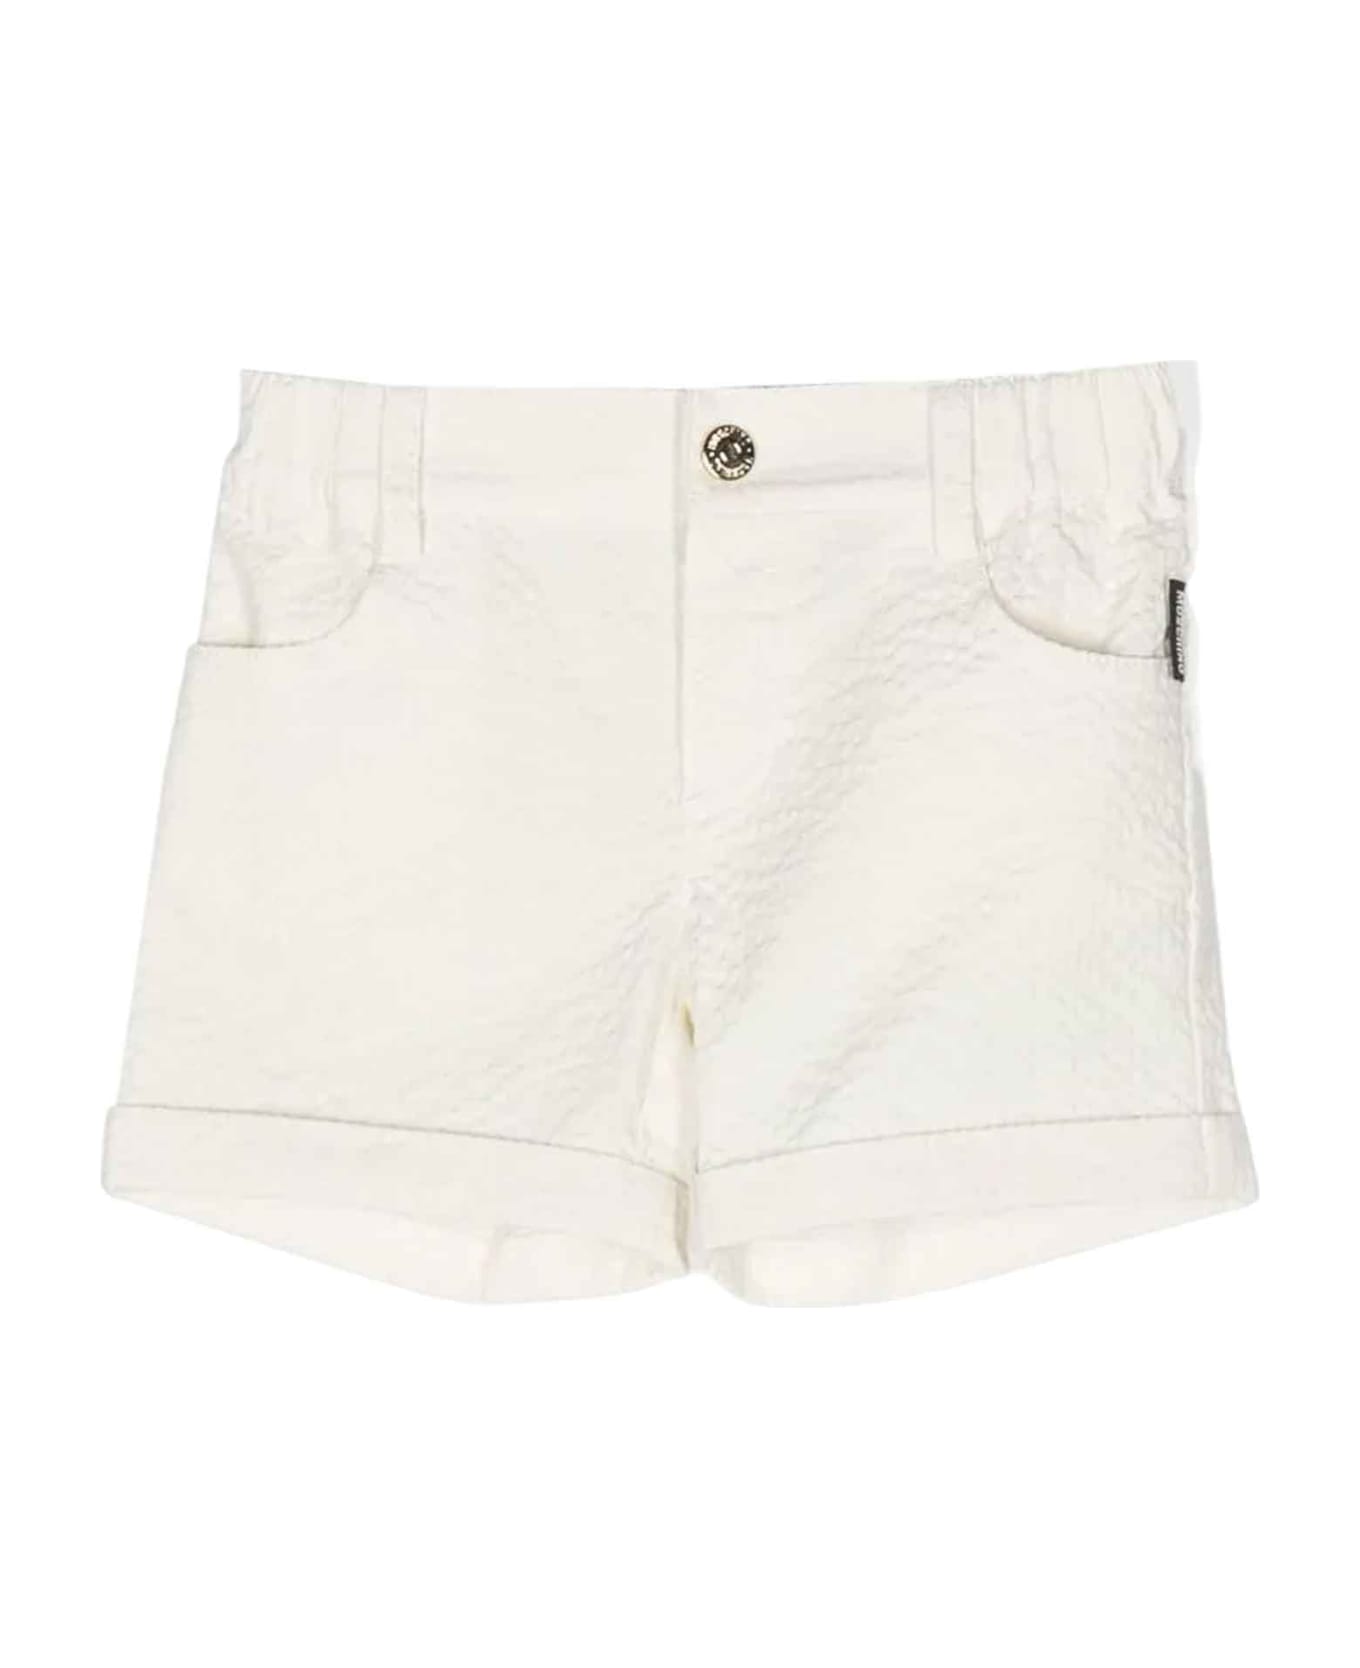 Moschino White Shorts Baby Unisex - Bianco ボトムス